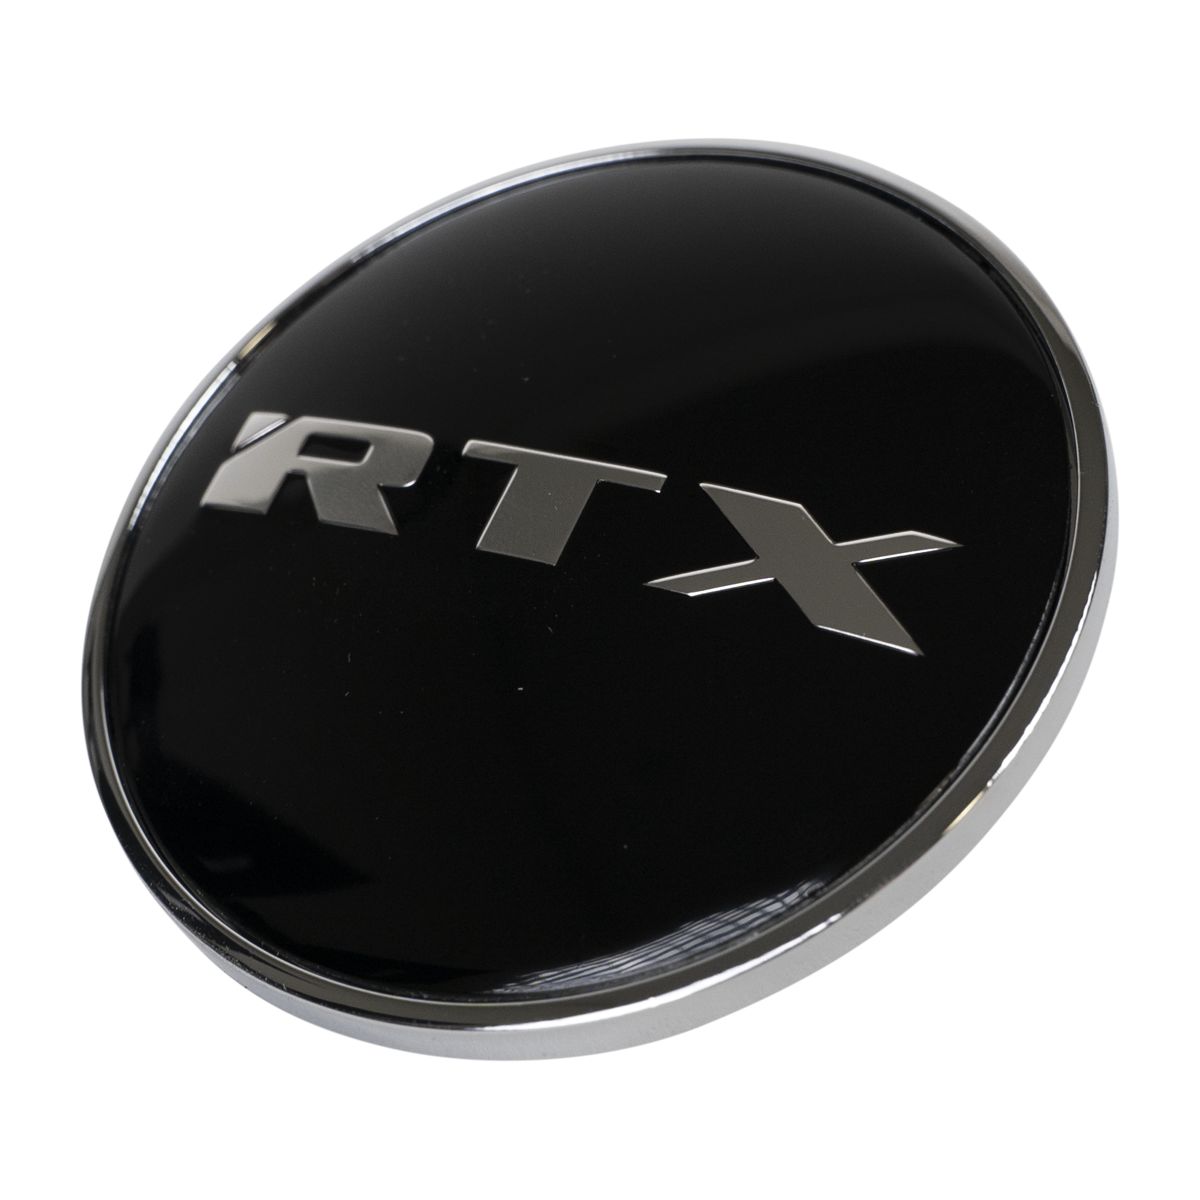 181K69RTB - Center Cap Black with RTX Chrome with Black Background 181K69